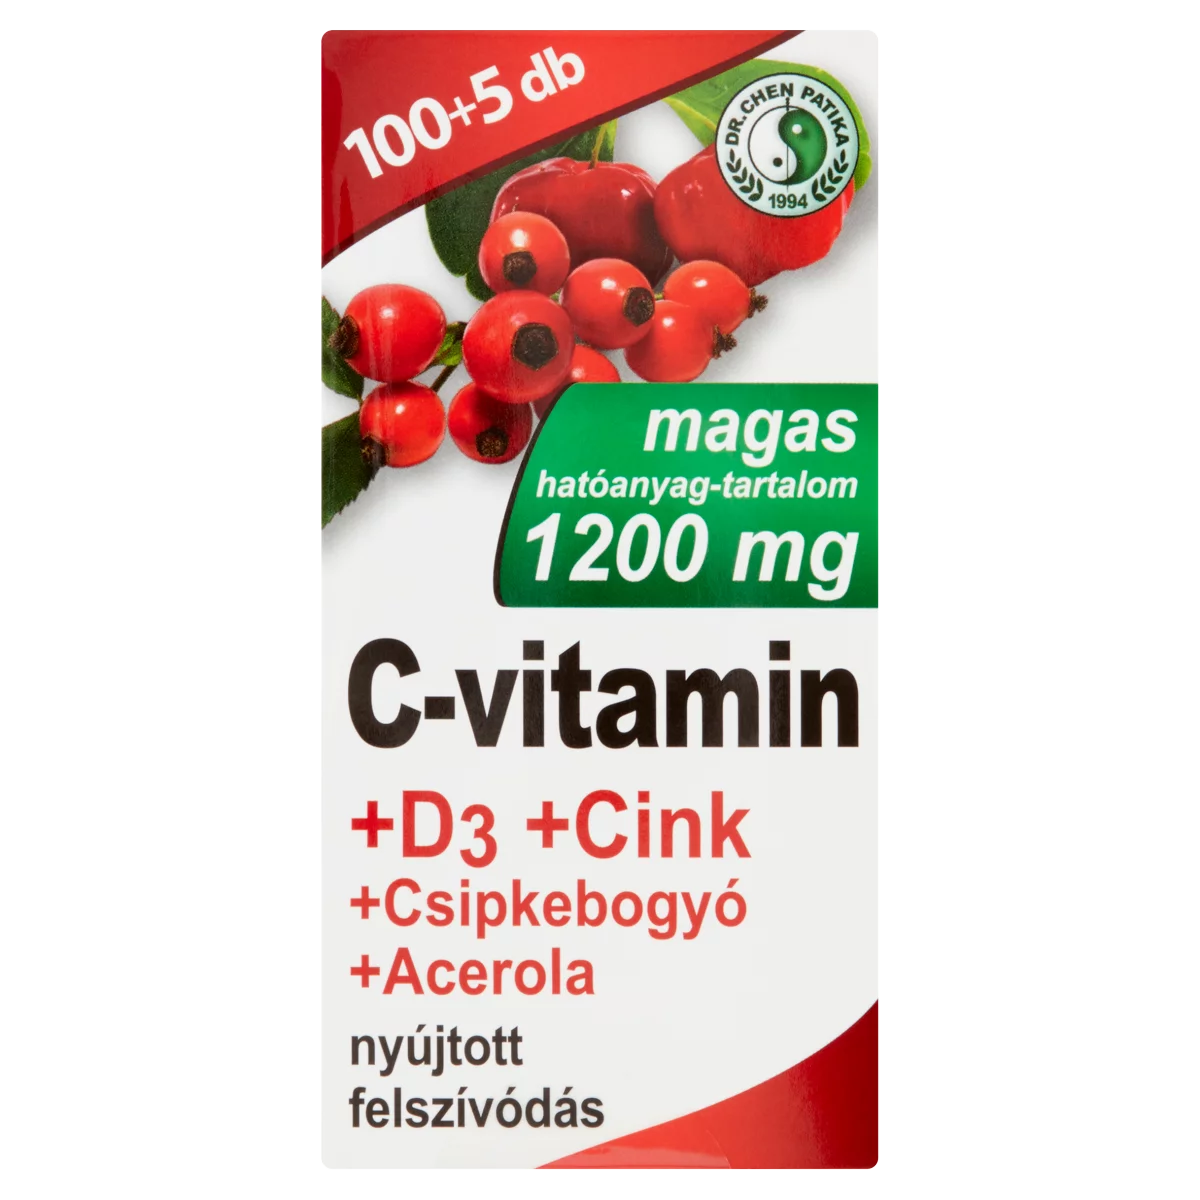 Dr. Chen Patika 1200 mg C-vitamin+D3-vitamin+Cink+Csipkebogyó+Acerola filmtabletta 105 db 163,2 g